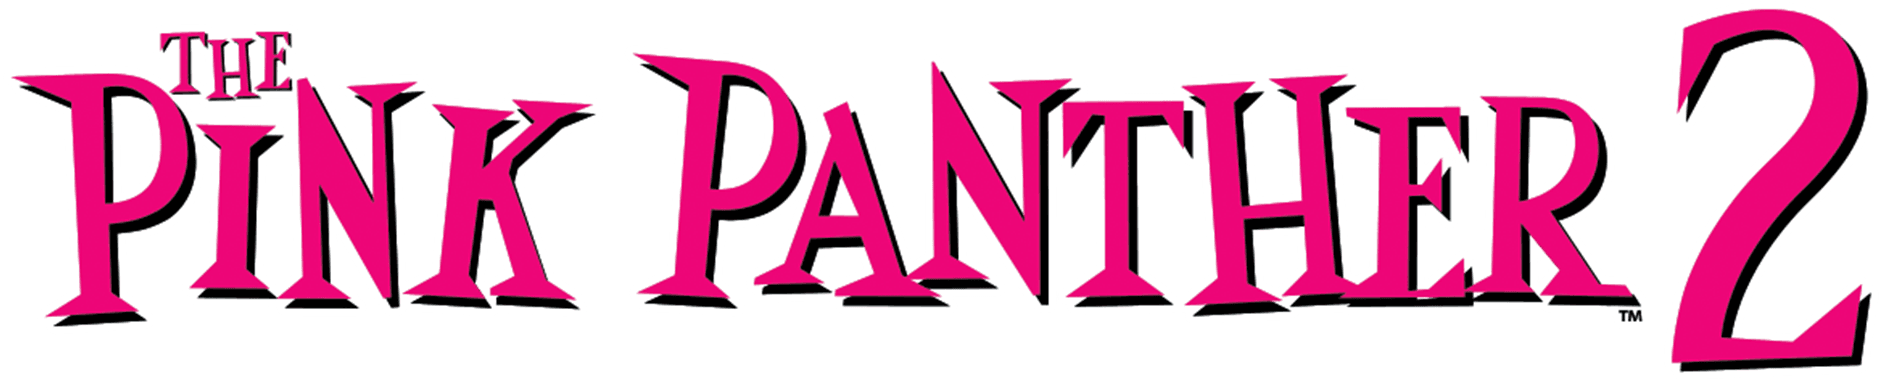 The Pink Panther 2 logo